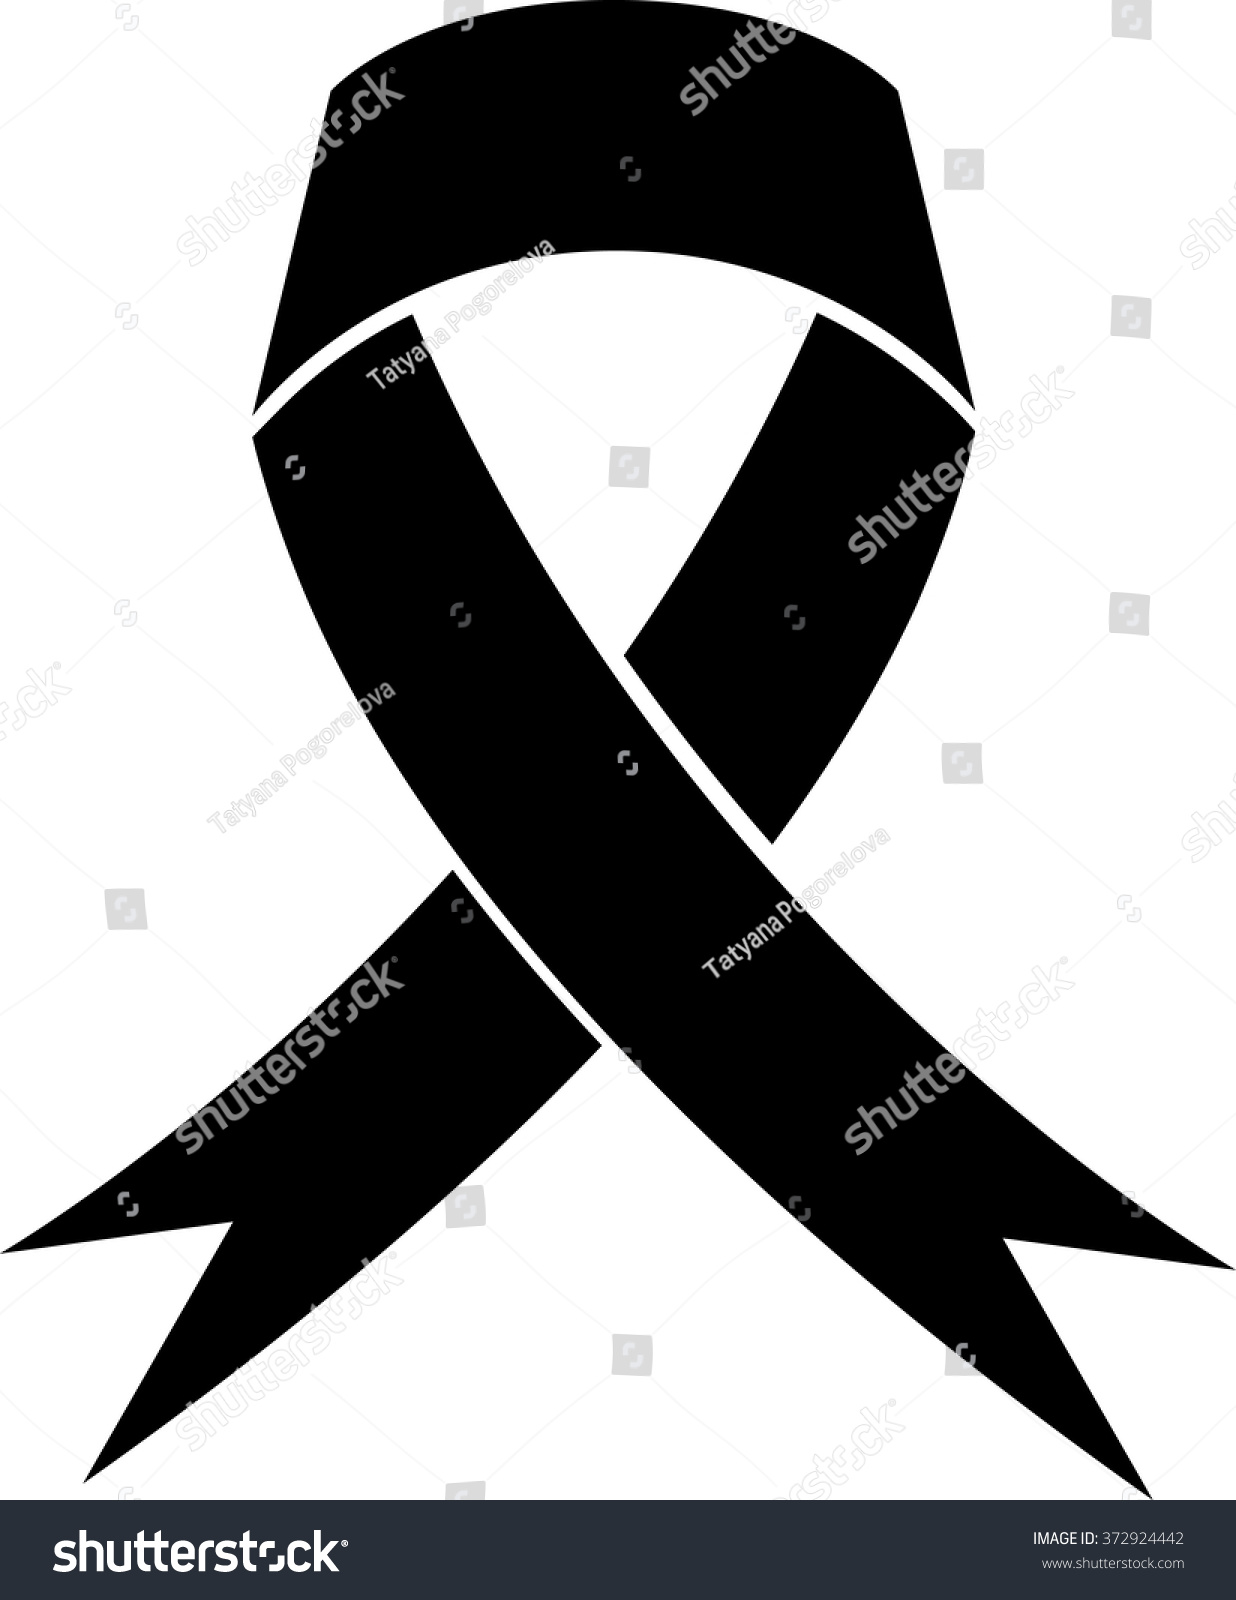 SVG of Mourning and Melanoma Support symbol - vector illustration. svg